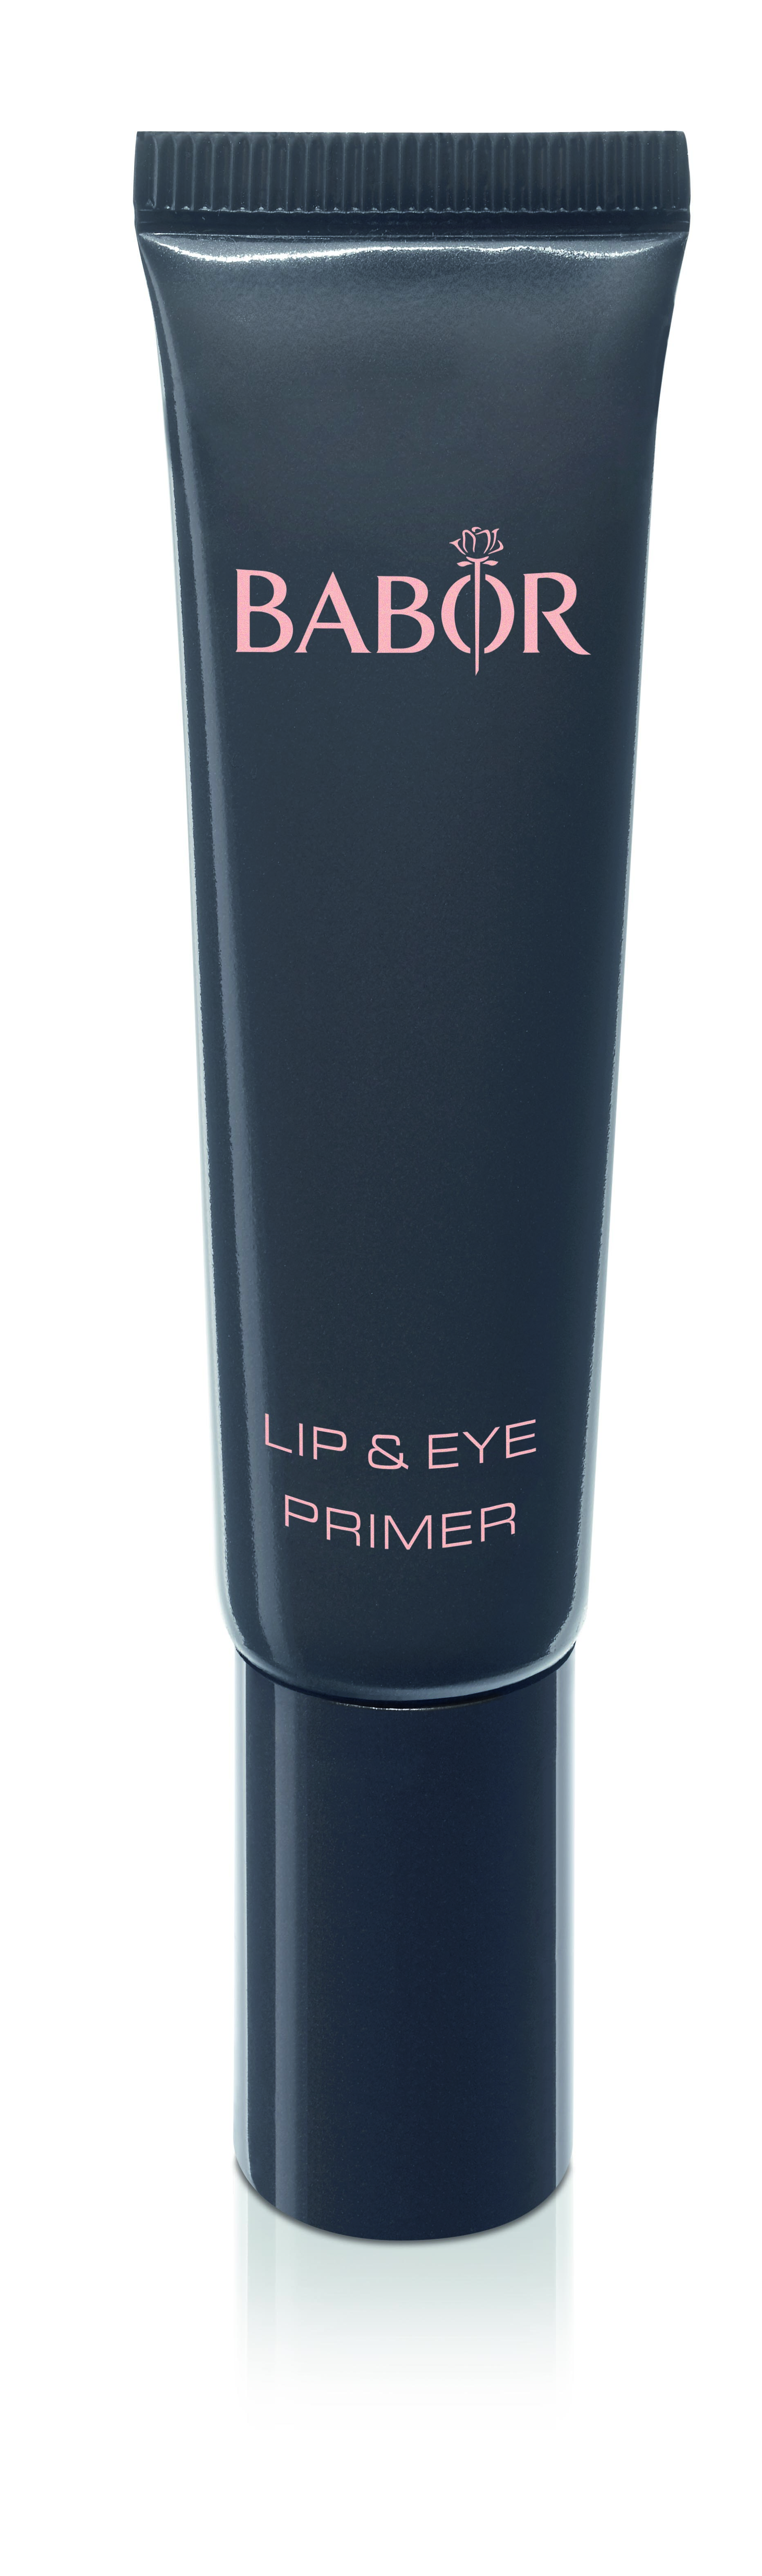 BABOR Праймер для макияжа губ и век / Lip & Eye Primer 15 мл